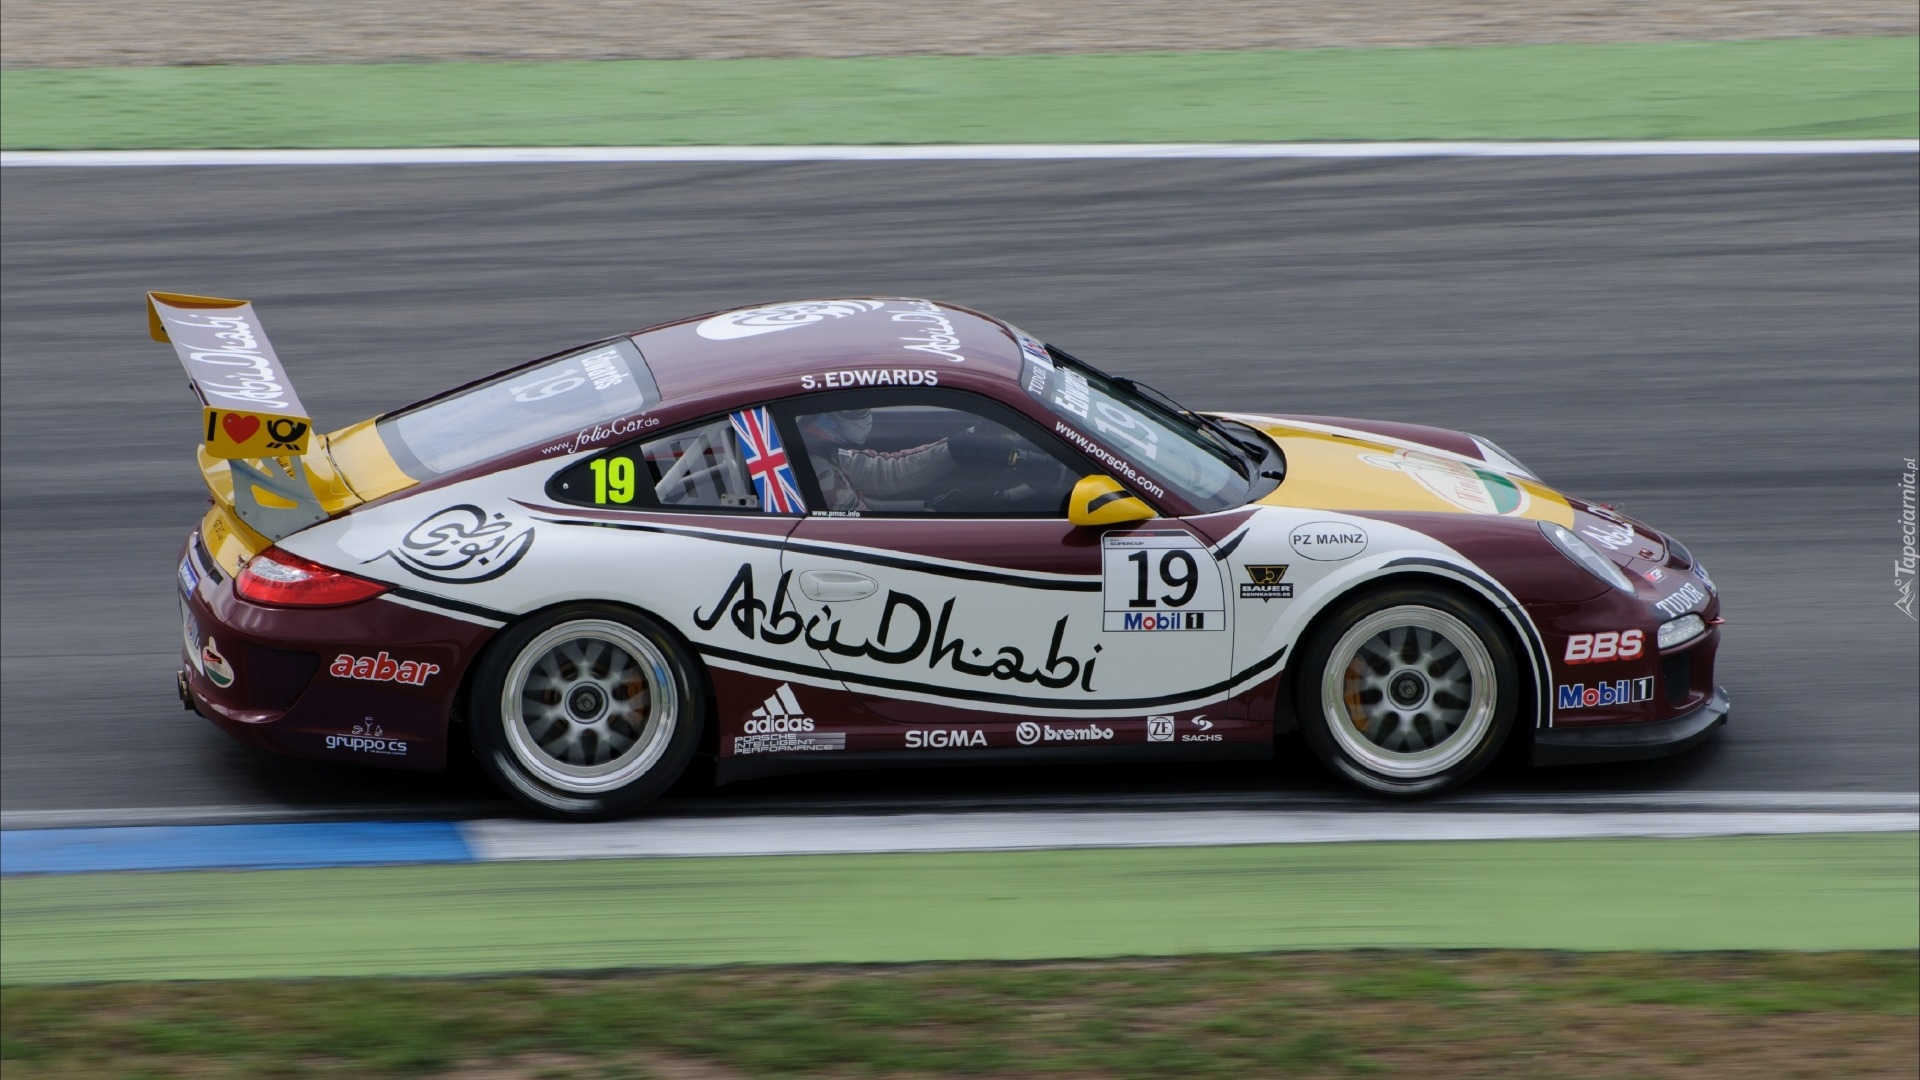 Rajdowe, Porsche, Team Abu Dhabi by Tolimit, 2010